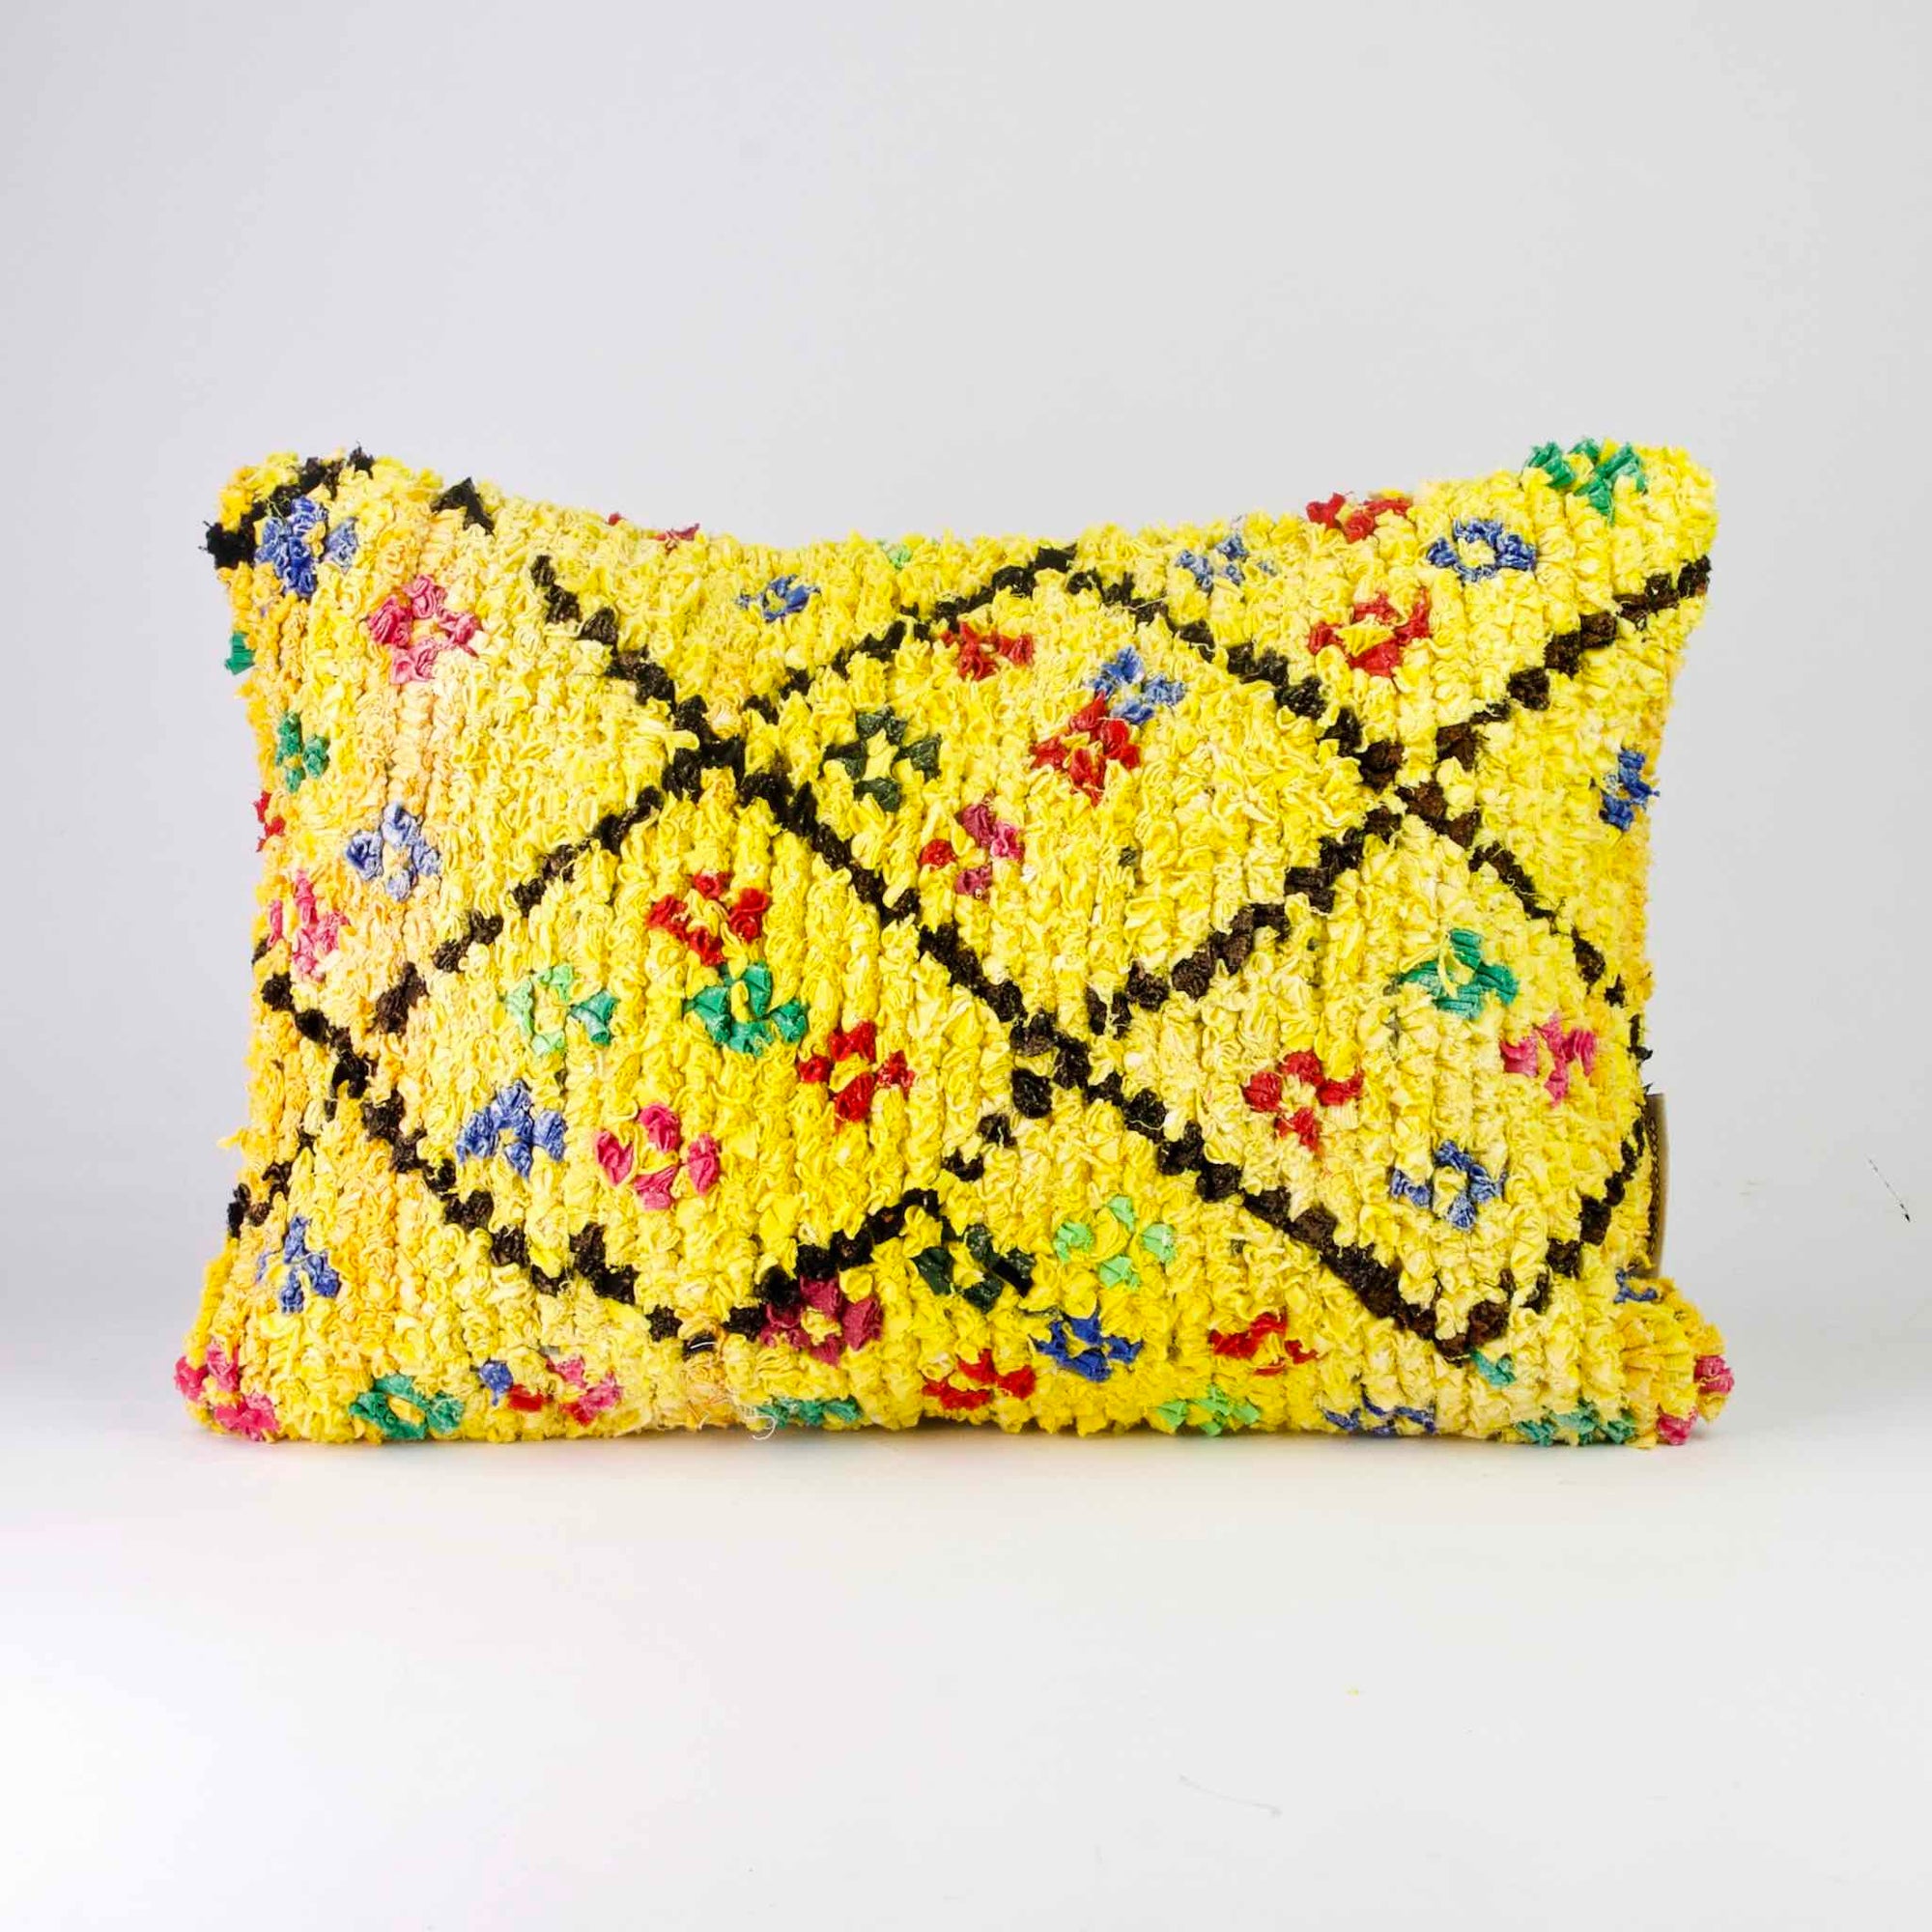 Yellow Boucherouite throw pillow. The yellow pillow has colorful dots.